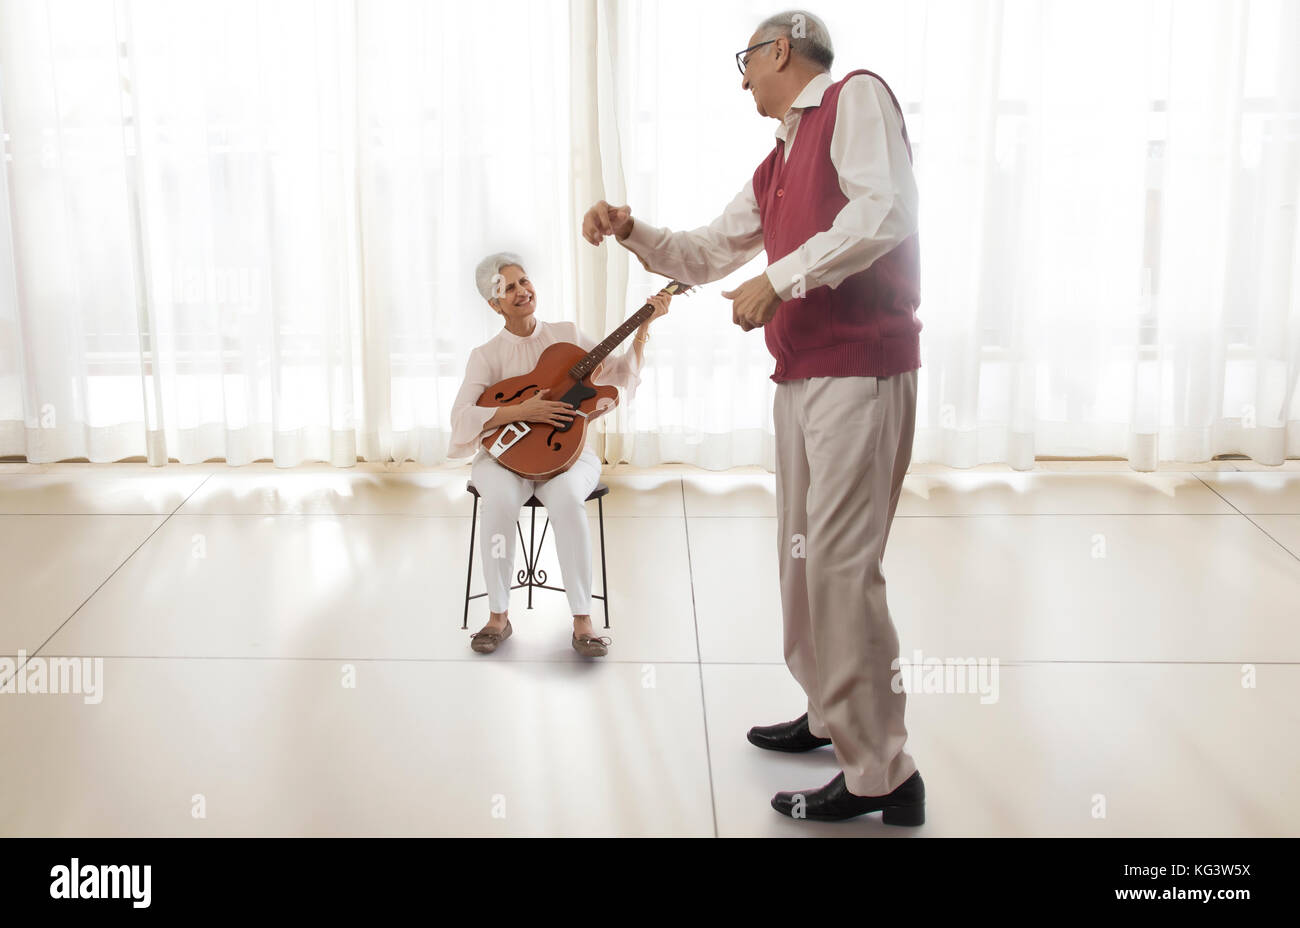 Senior woman playing guitar and senior man dancing Stock Photo